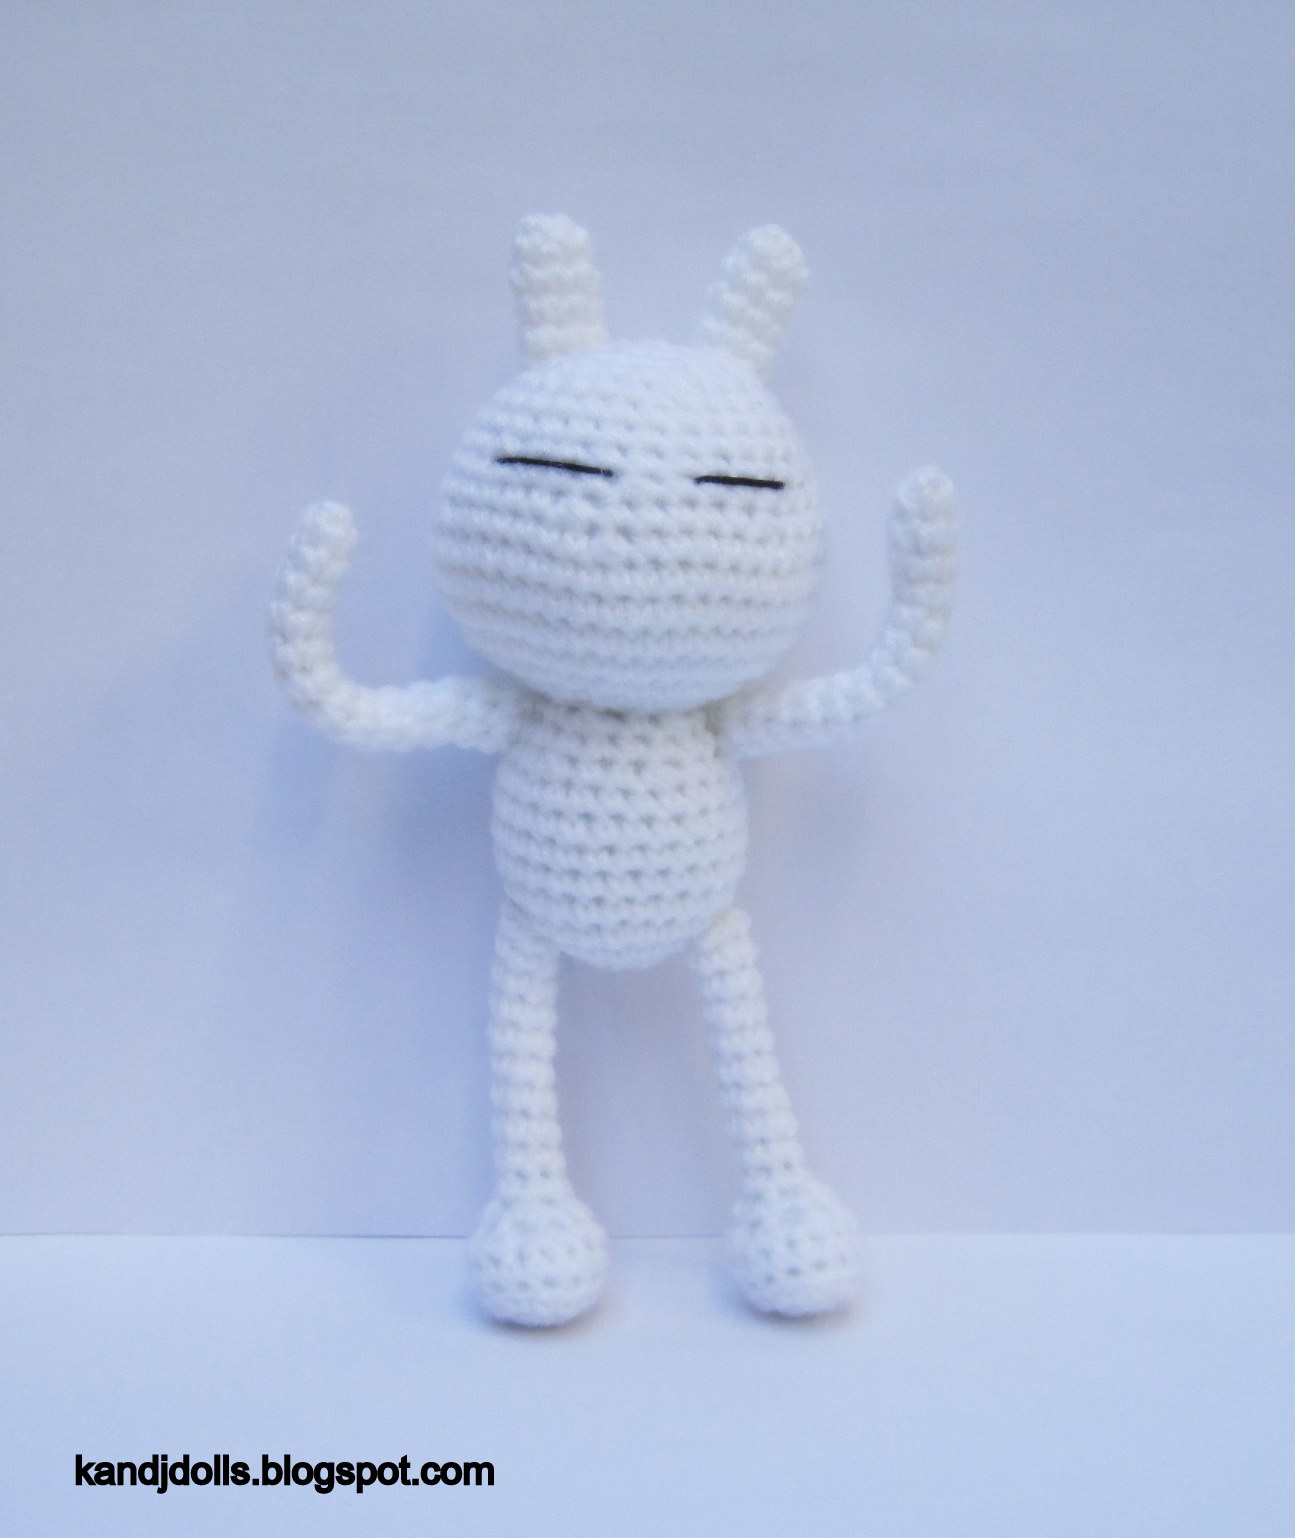 Amigurumi crochet pattern and tutorial by jennyandteddy: free